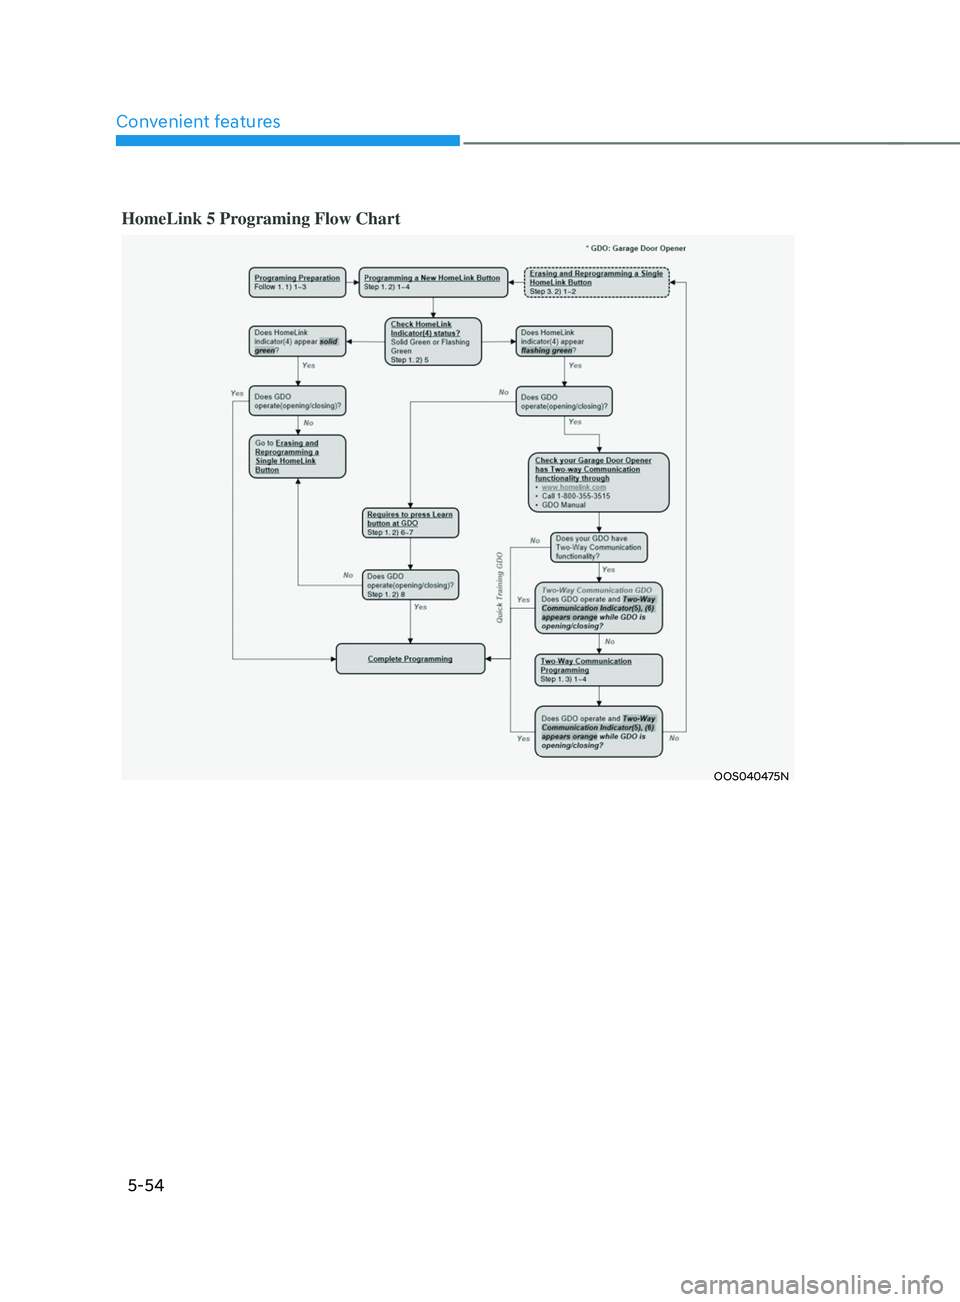 HYUNDAI SANTA FE 2021  Owners Manual Convenient features
5-54
HomeLink 5 Programing Flow Chart
OOS040475N    